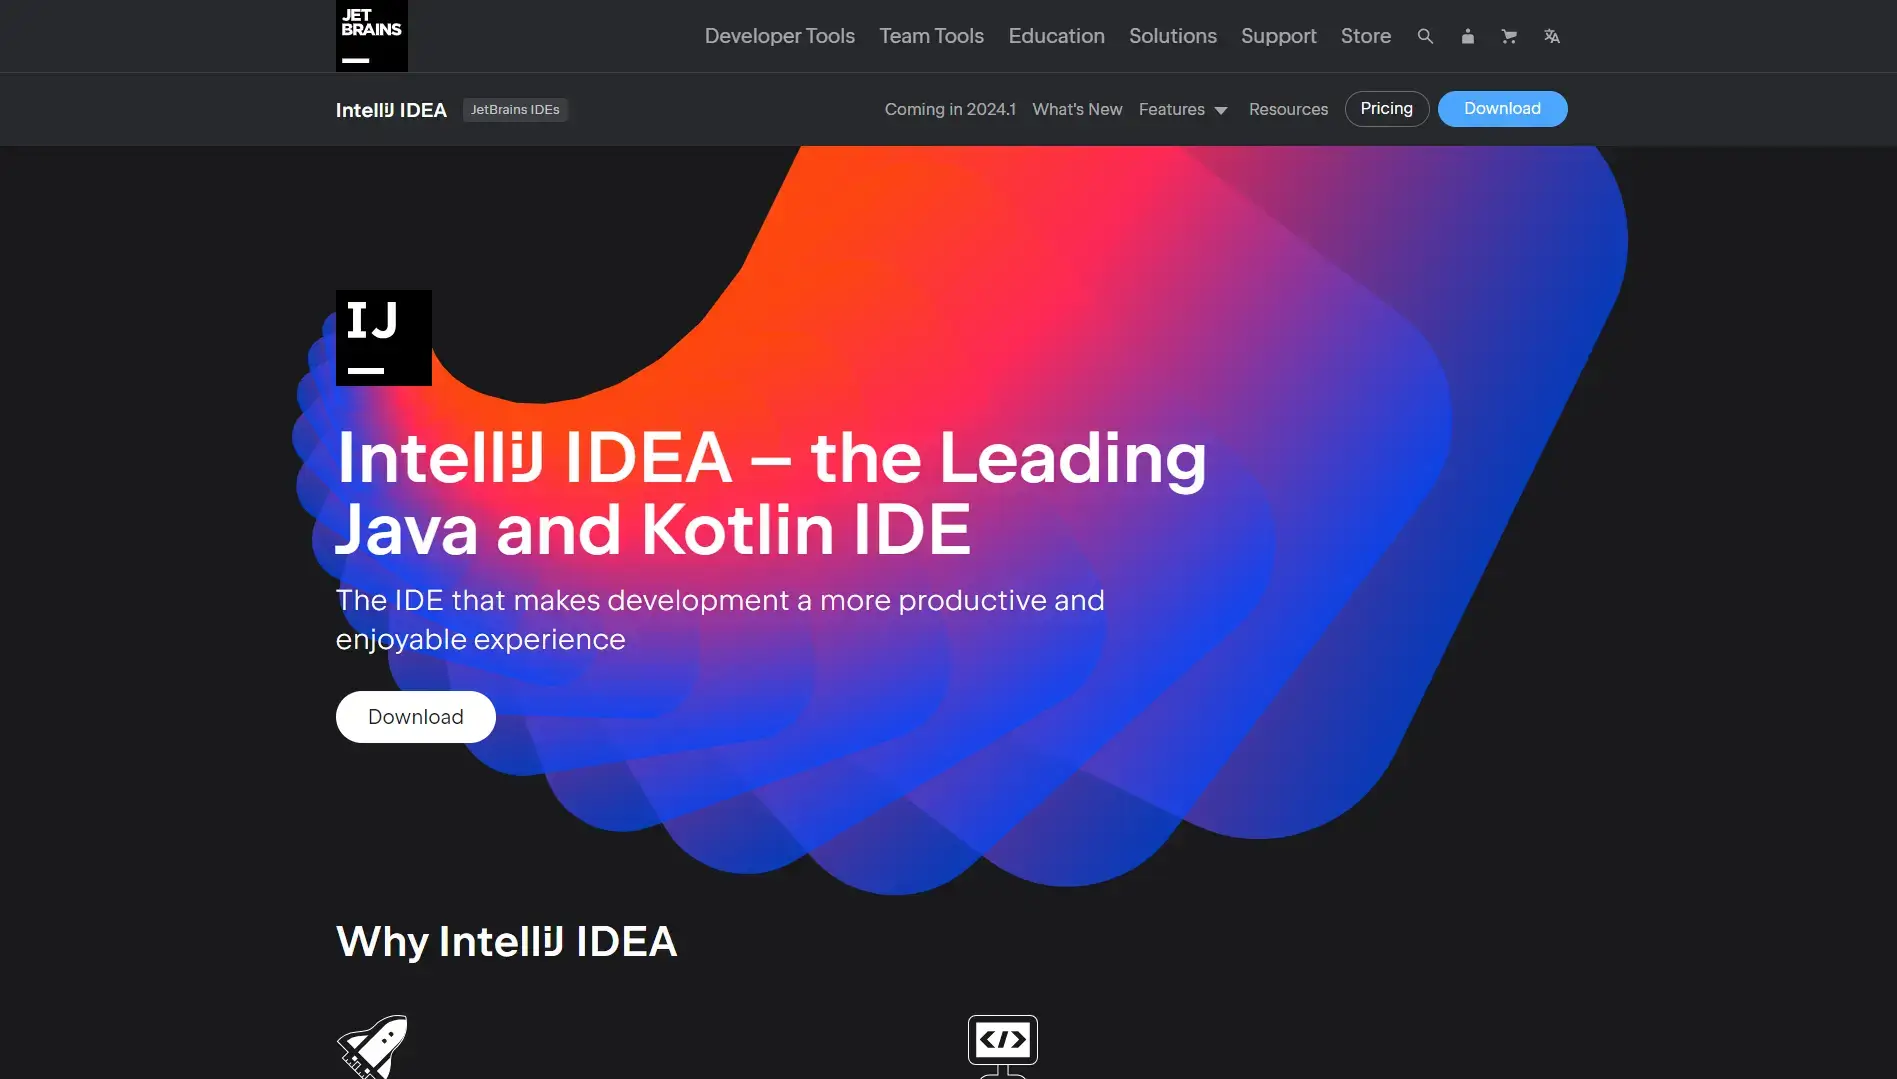 IntelliJ IDEA website homepage image.